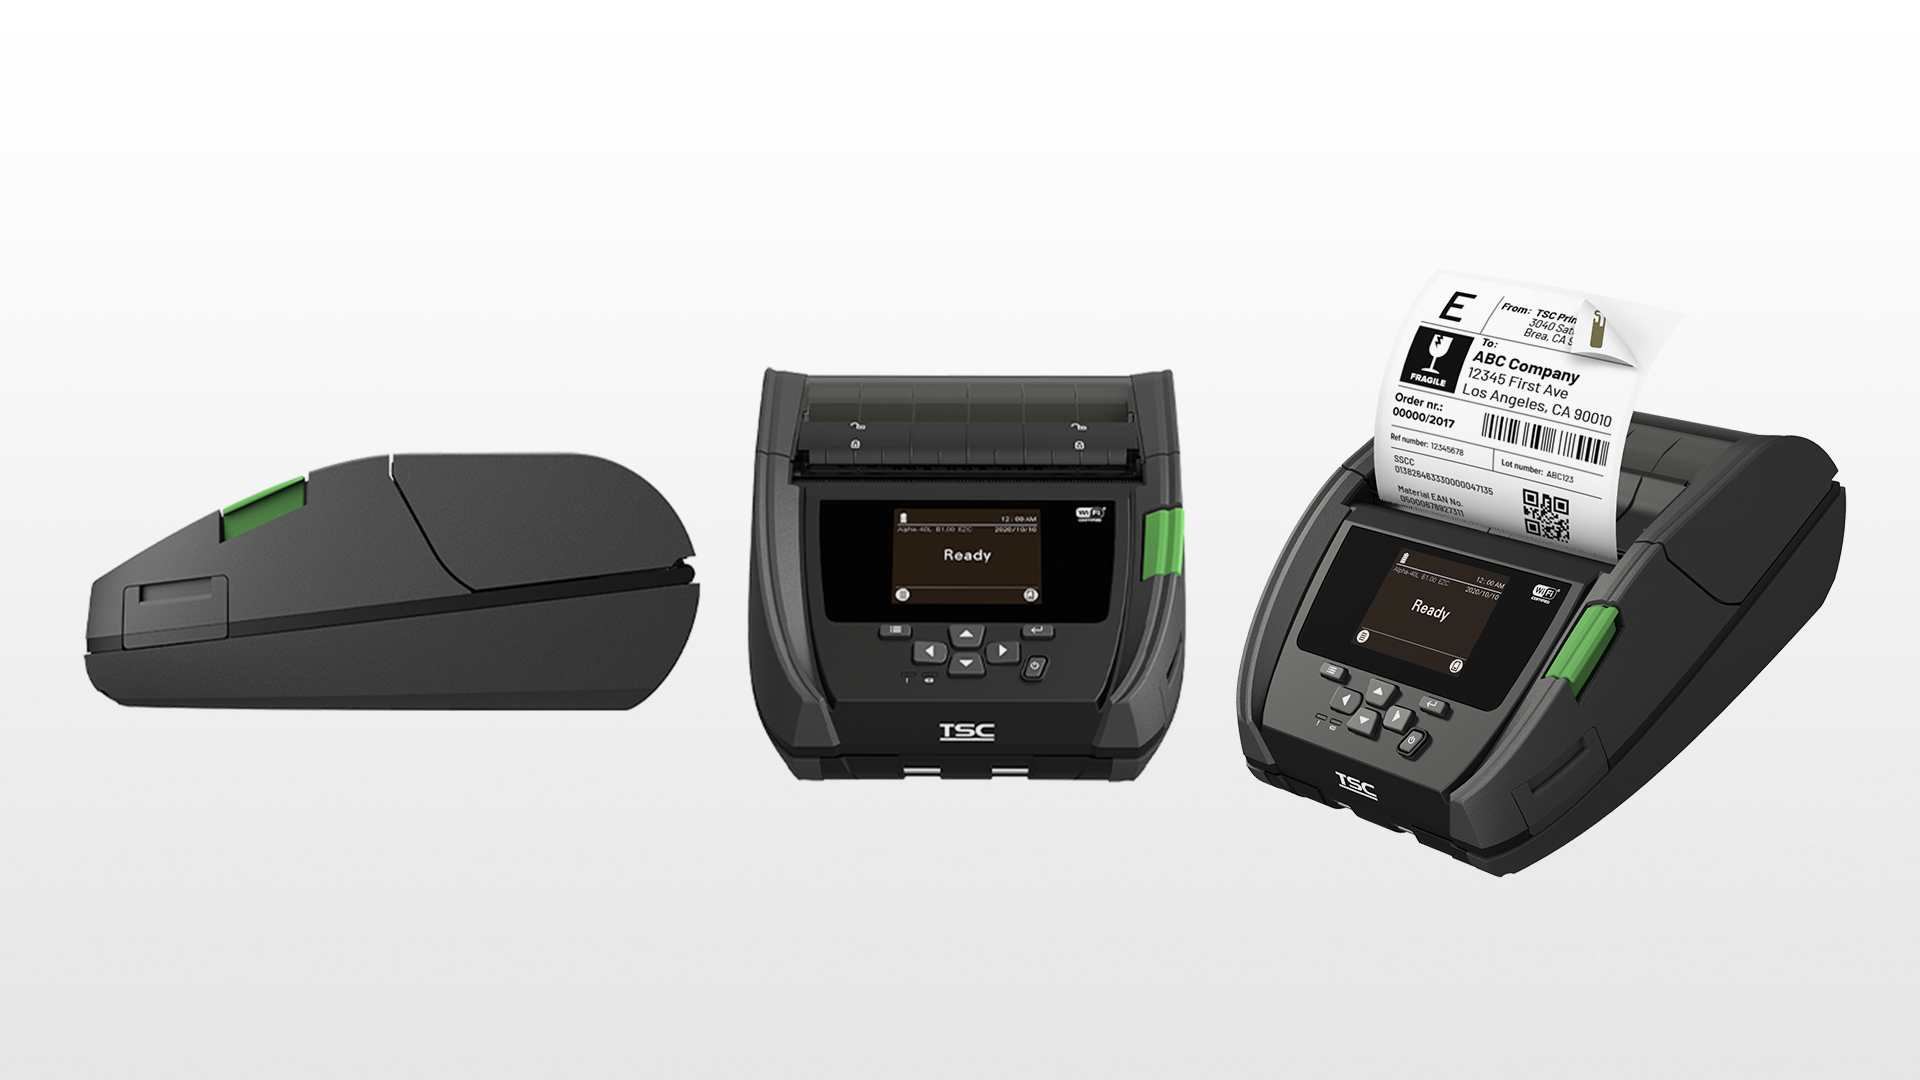 TSC Printronix Auto ID Launches Its First RFID Mobile Printer Alpha-40L RFID